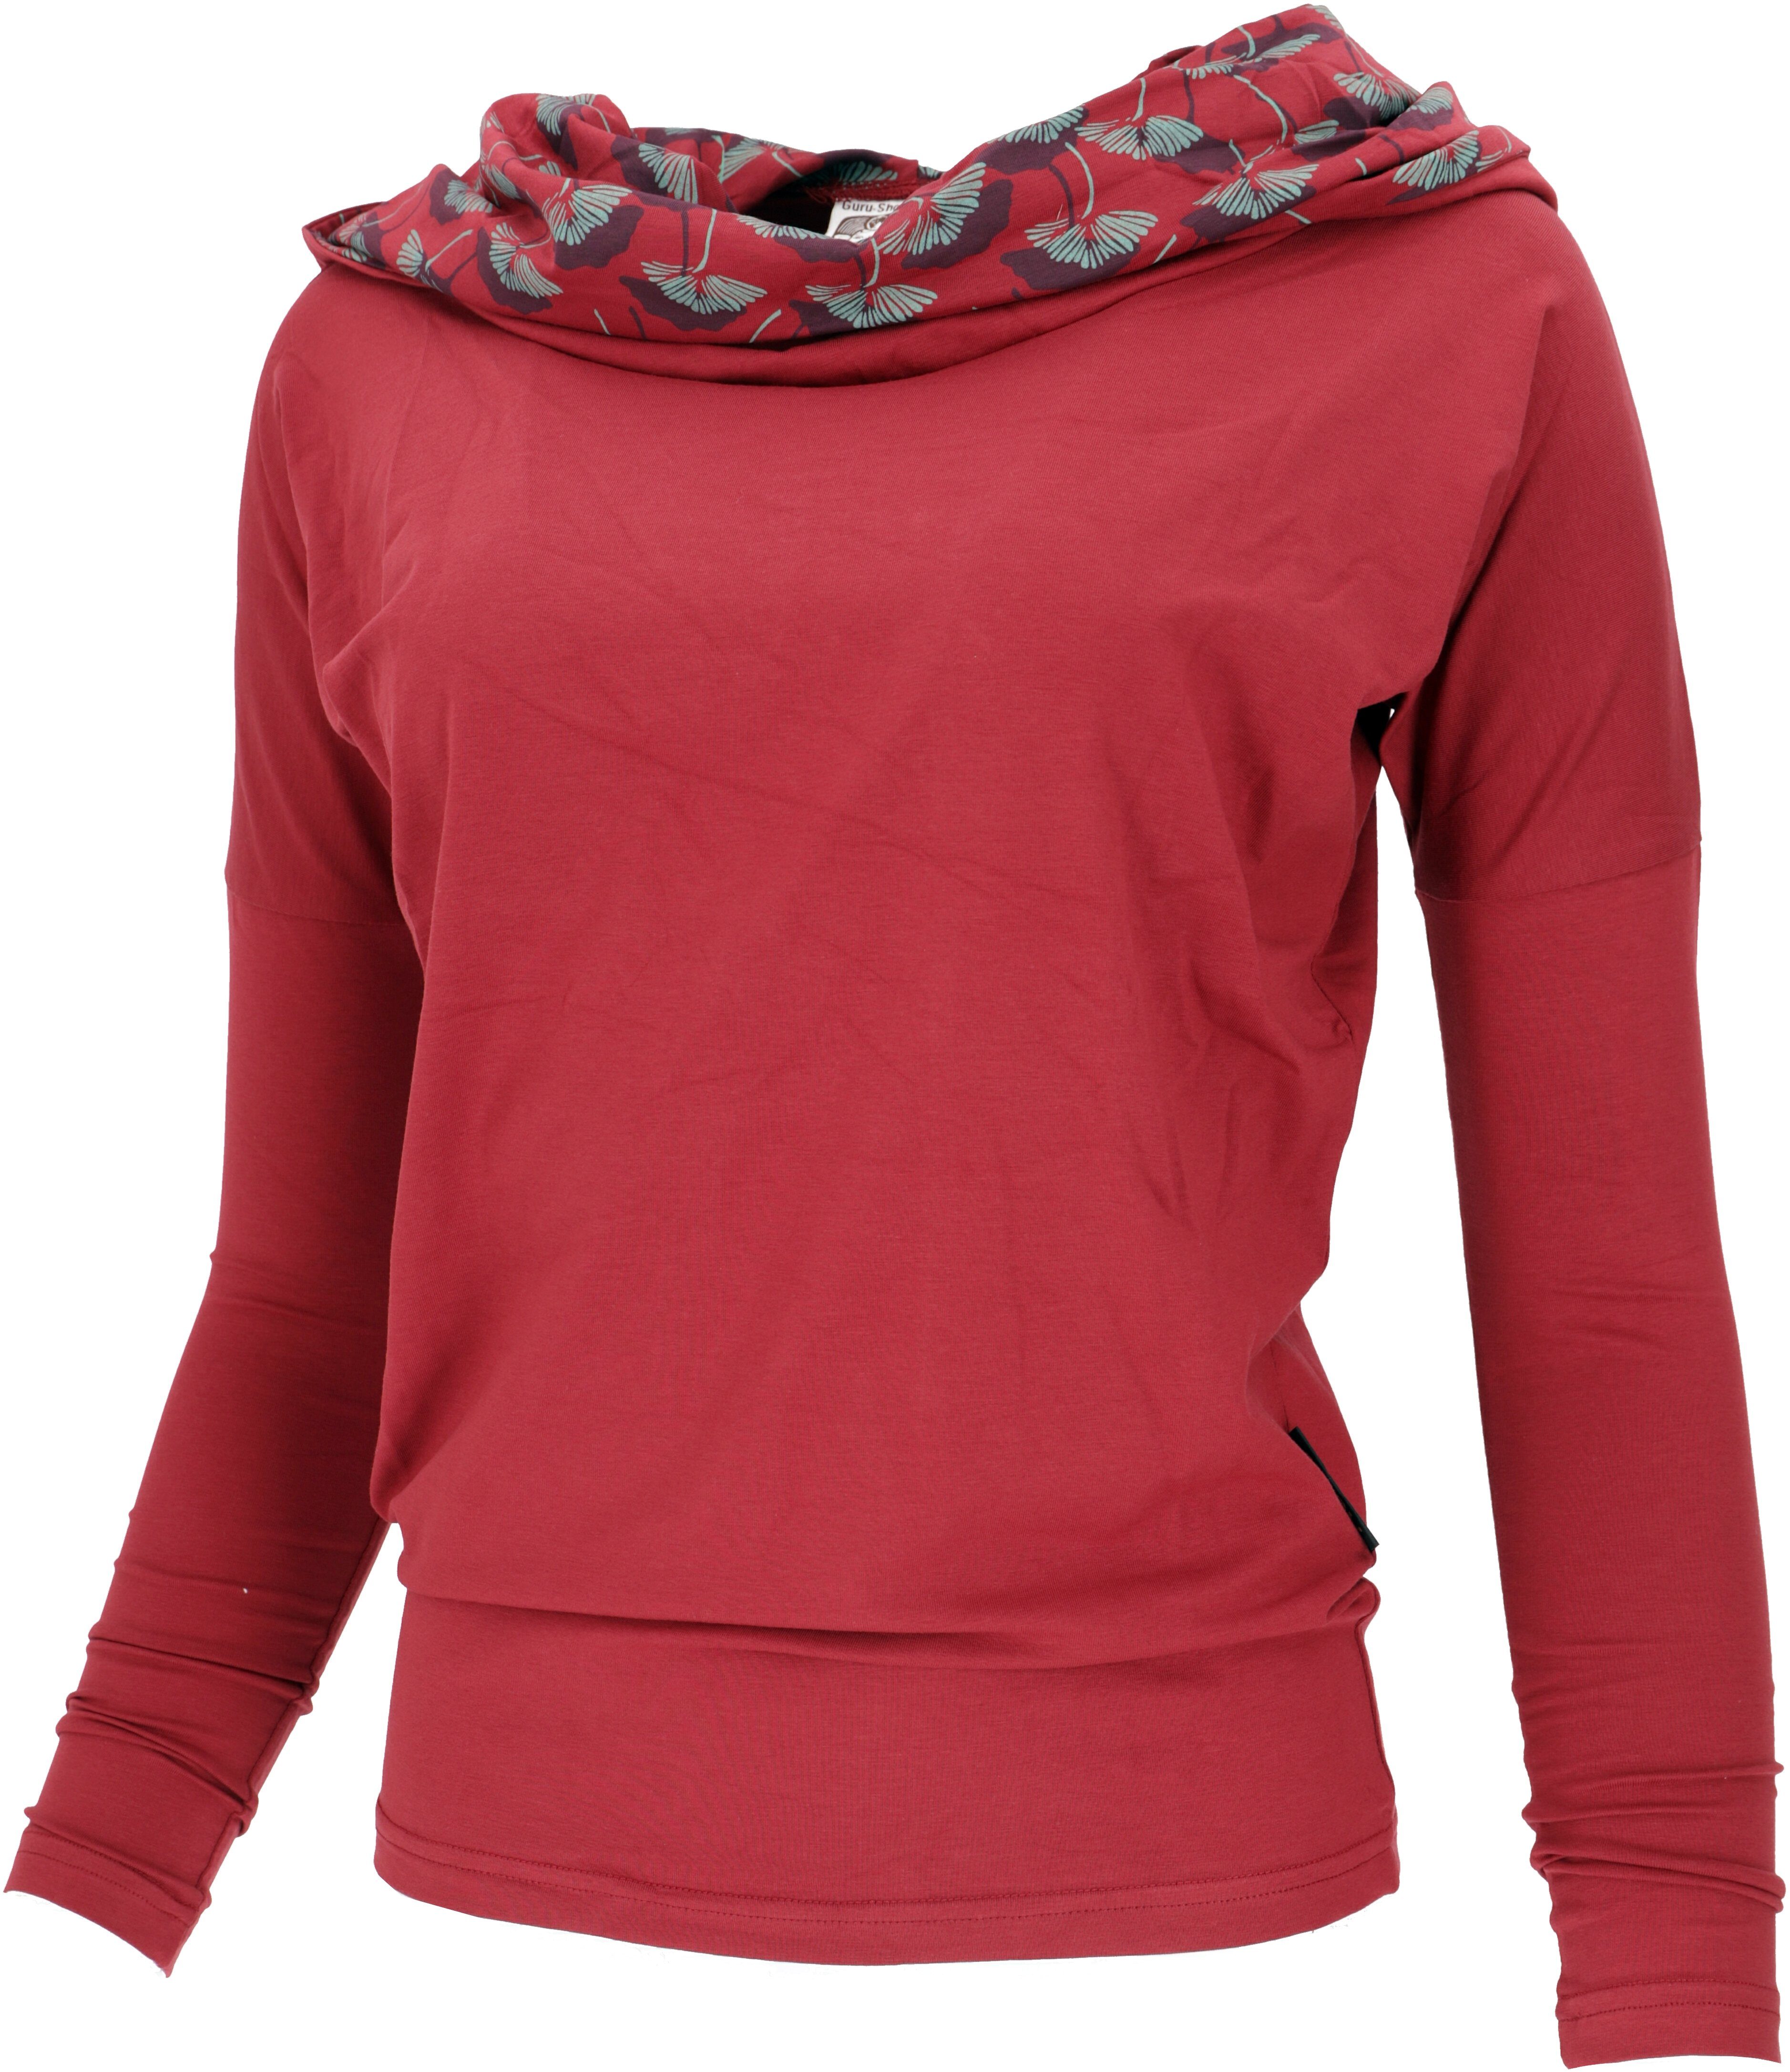 Guru-Shop Longsleeve Bekleidung aus Longshirt Bio-Baumwolle, rot alternative Lockeres Boho